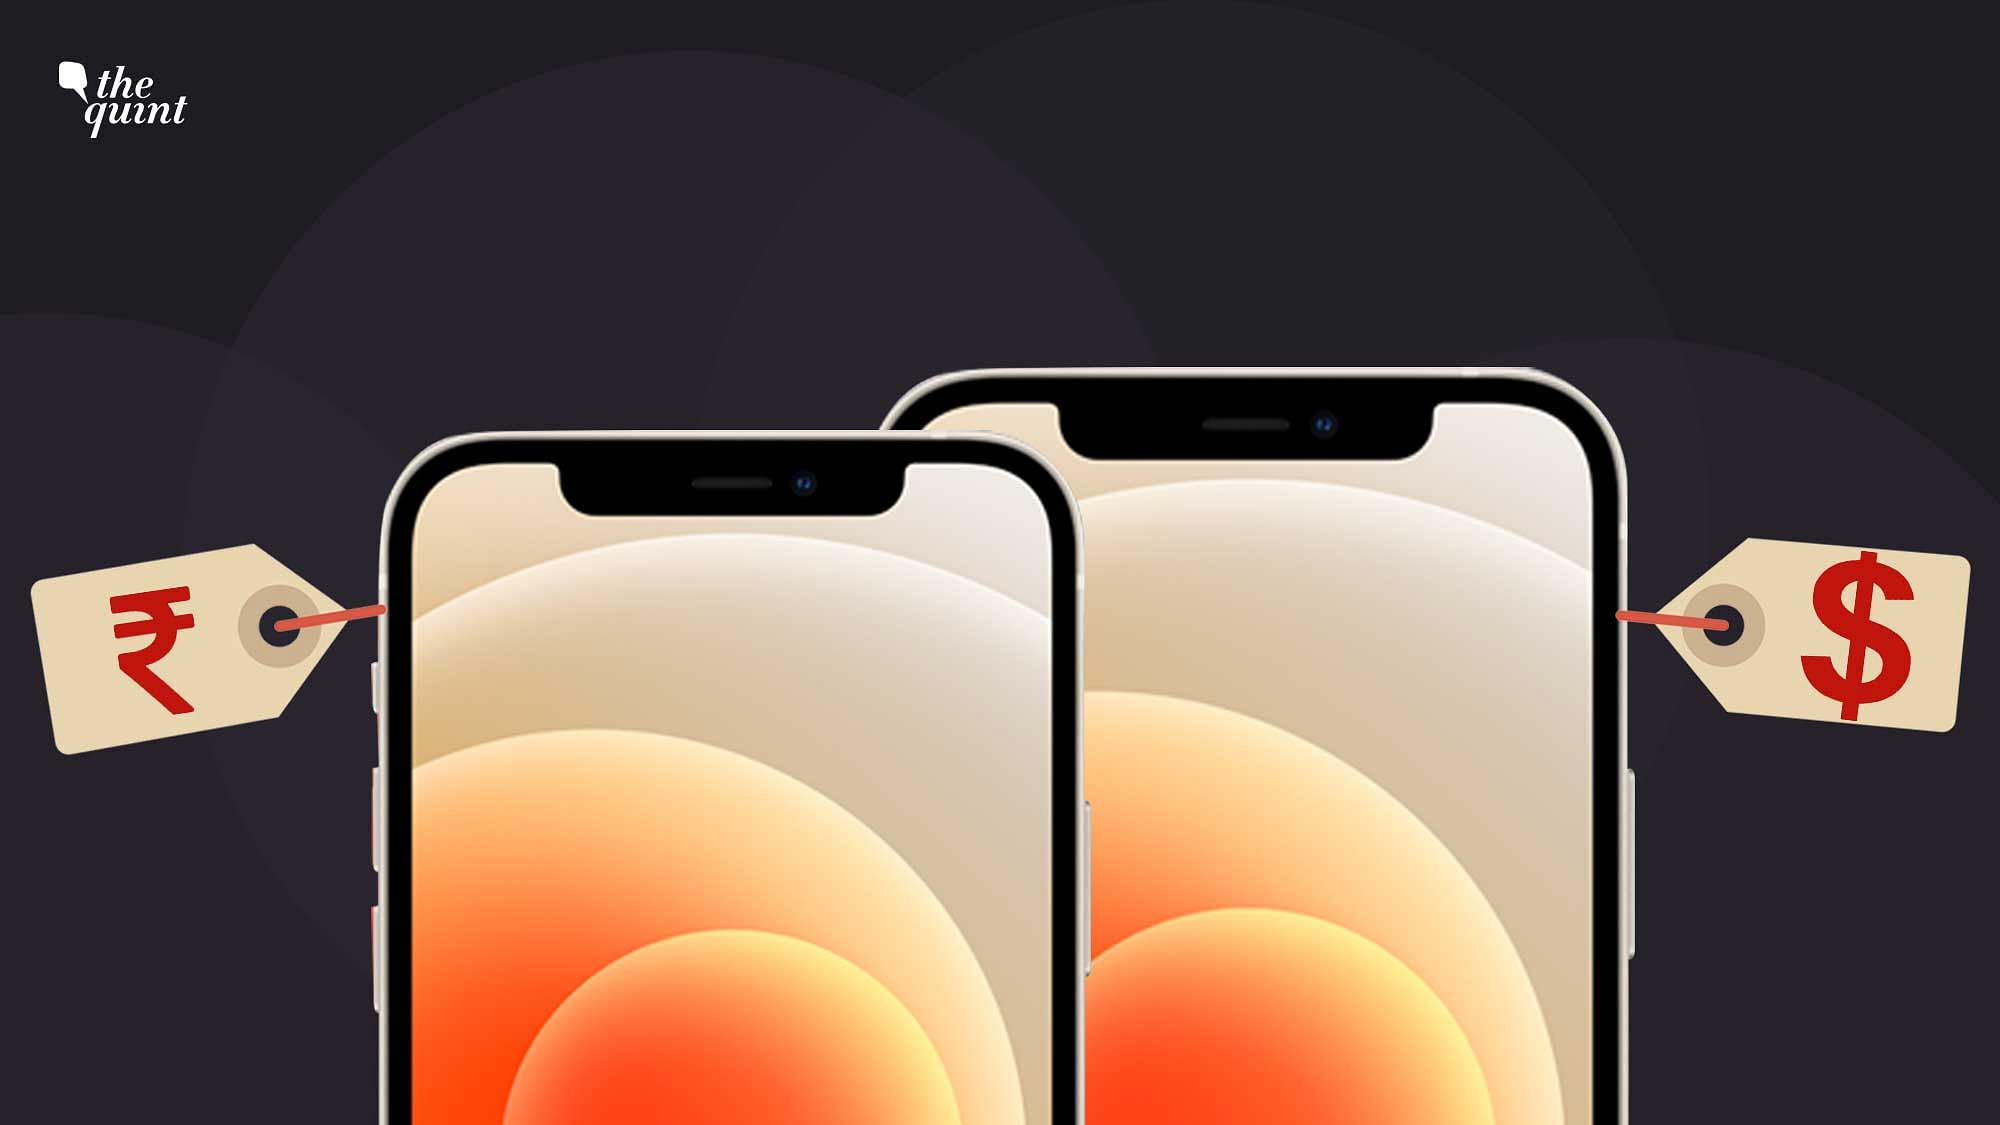 iPhone models wont have Periscope lenses until 2023.